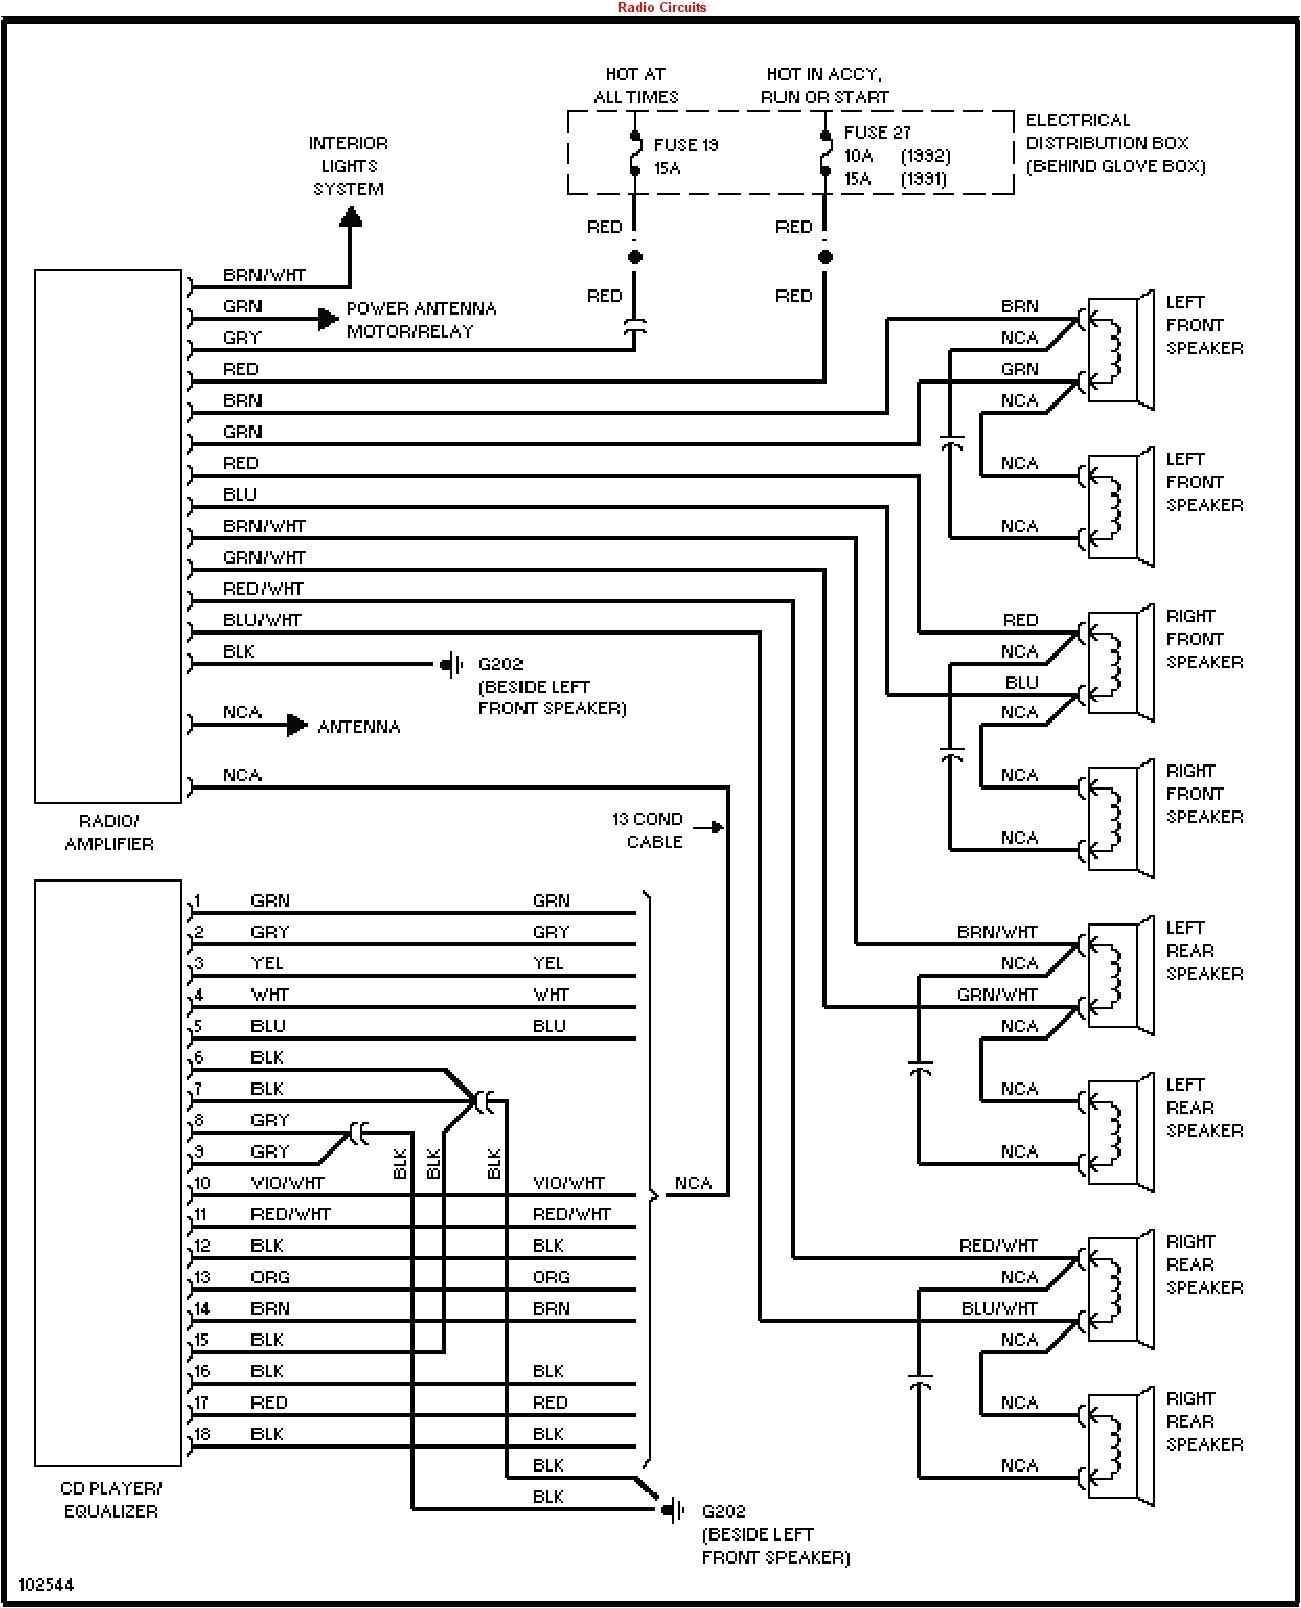 wiring free 2006 diagram dodgeweebly wiring diagram files free chrysler wiring diagrams free chrysler wiring diagrams